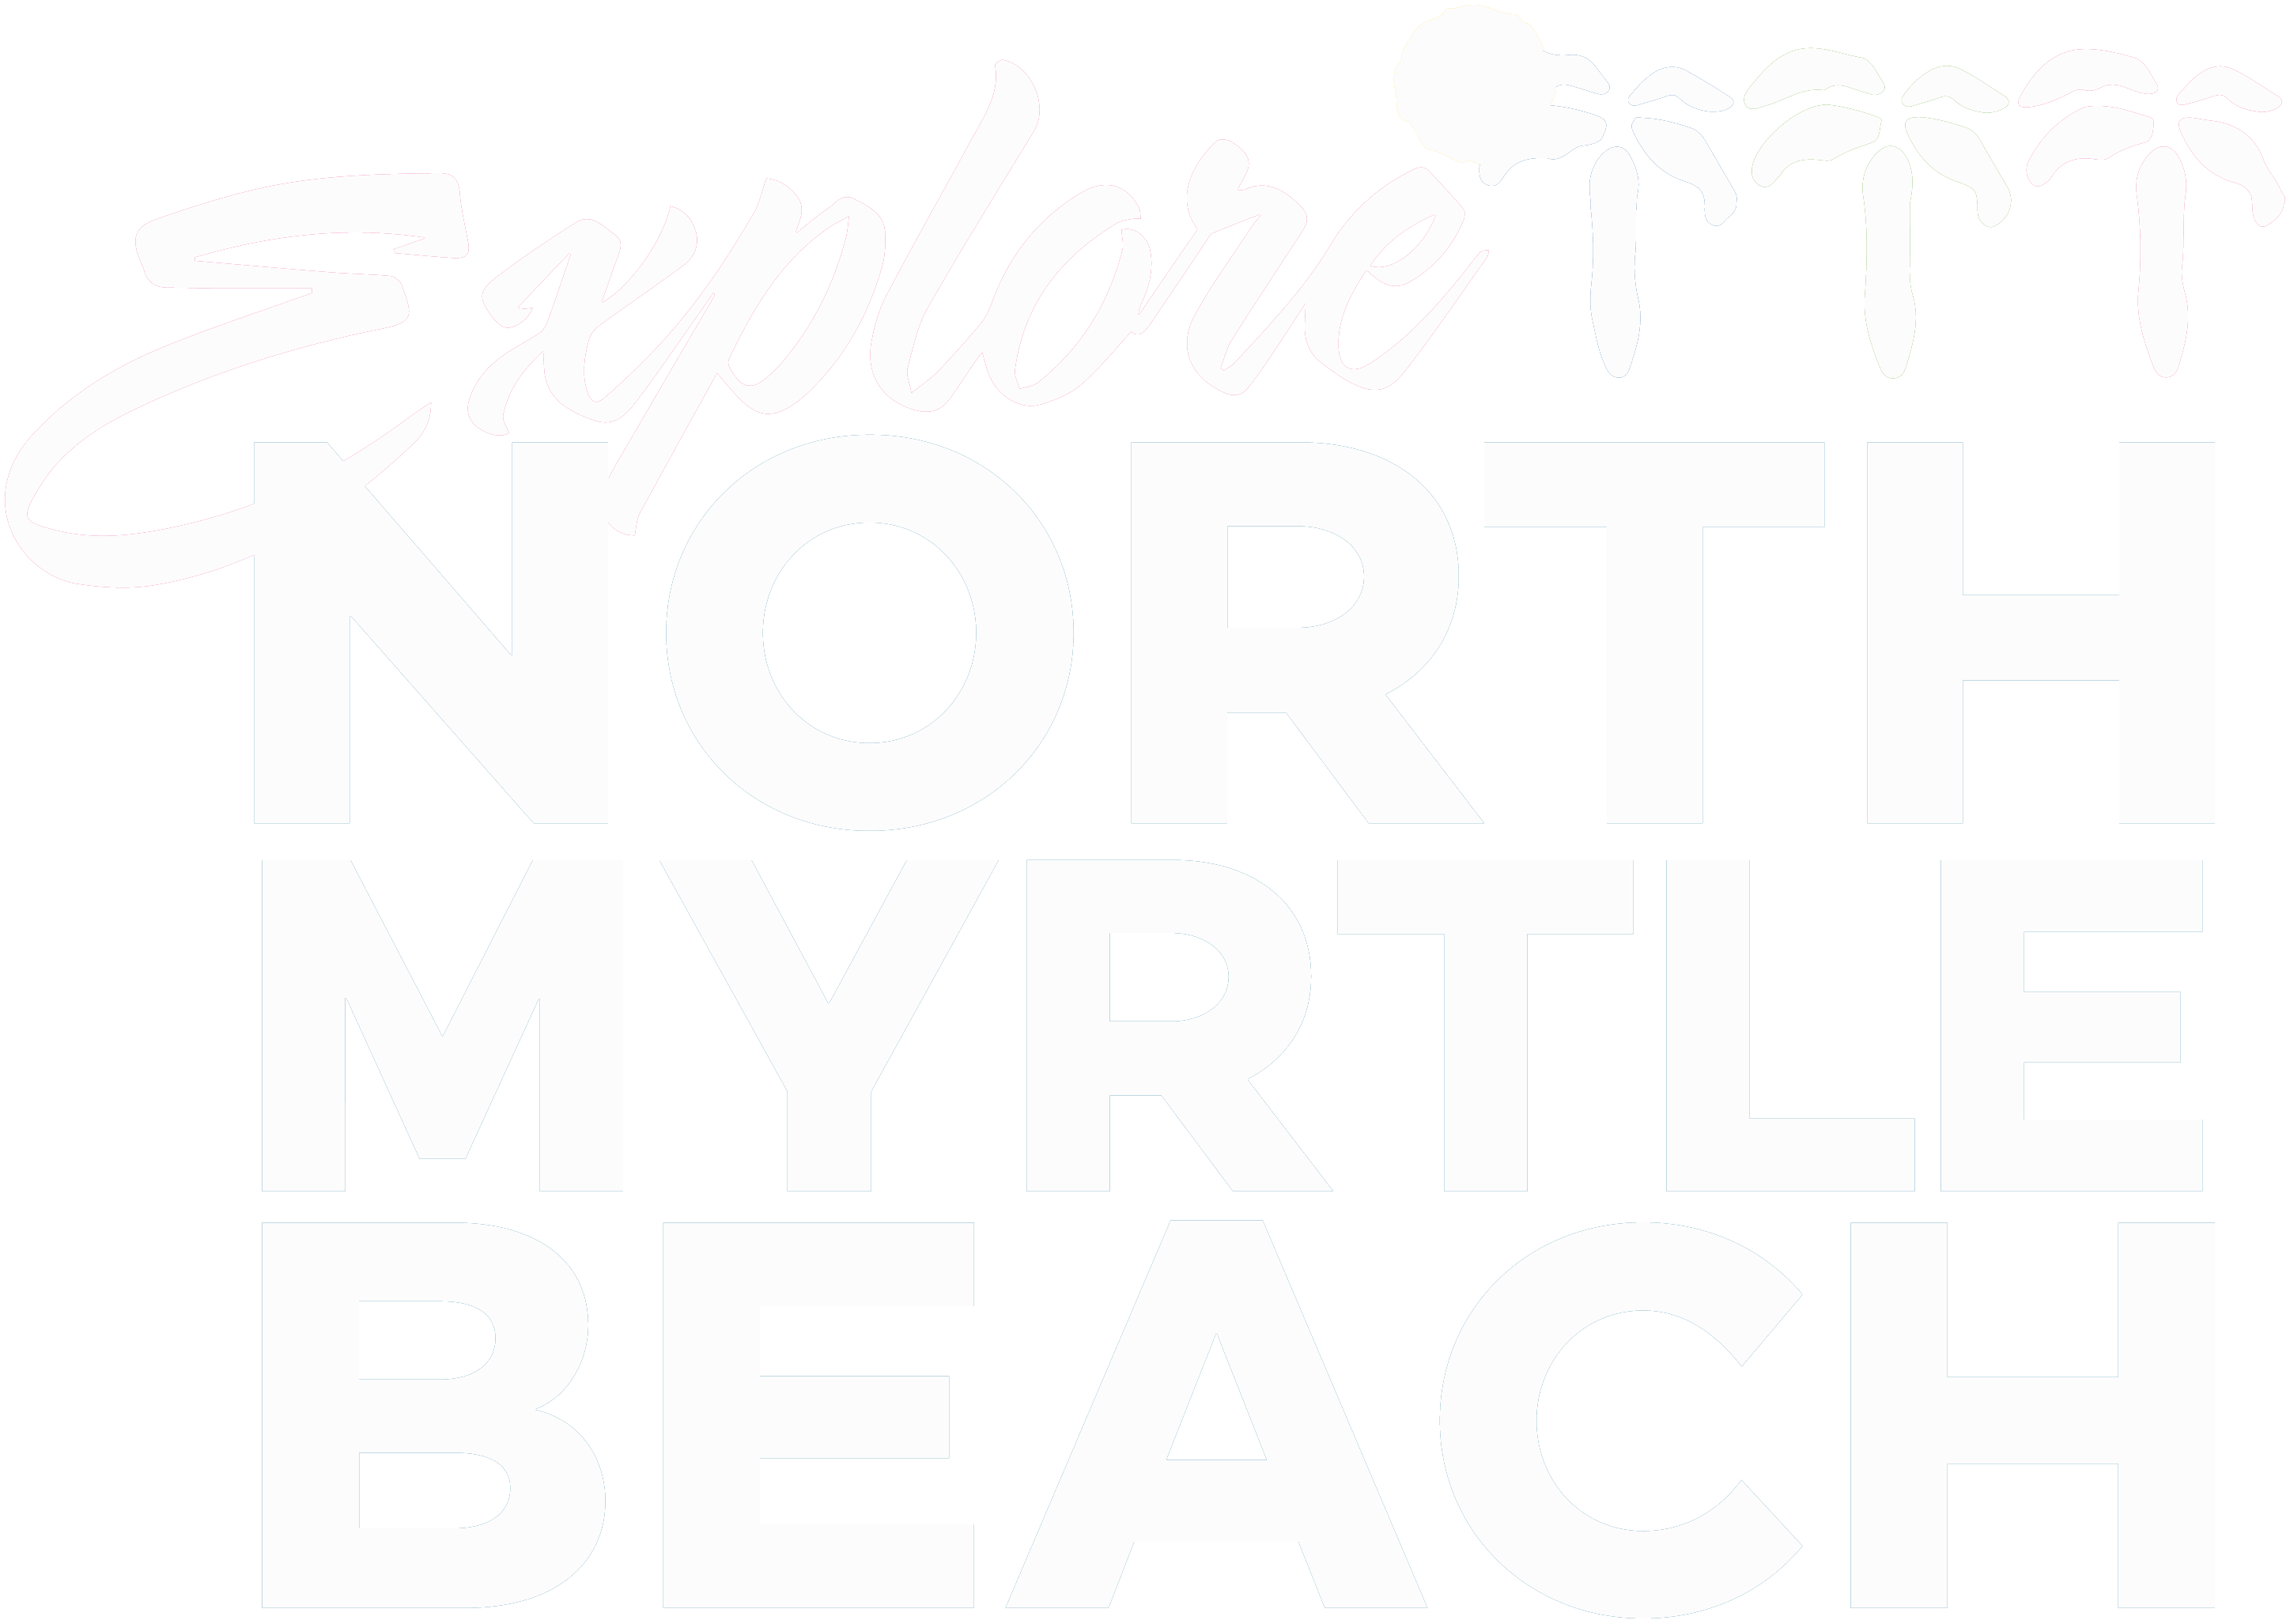 North Myrtle Beach Chamber & CVB